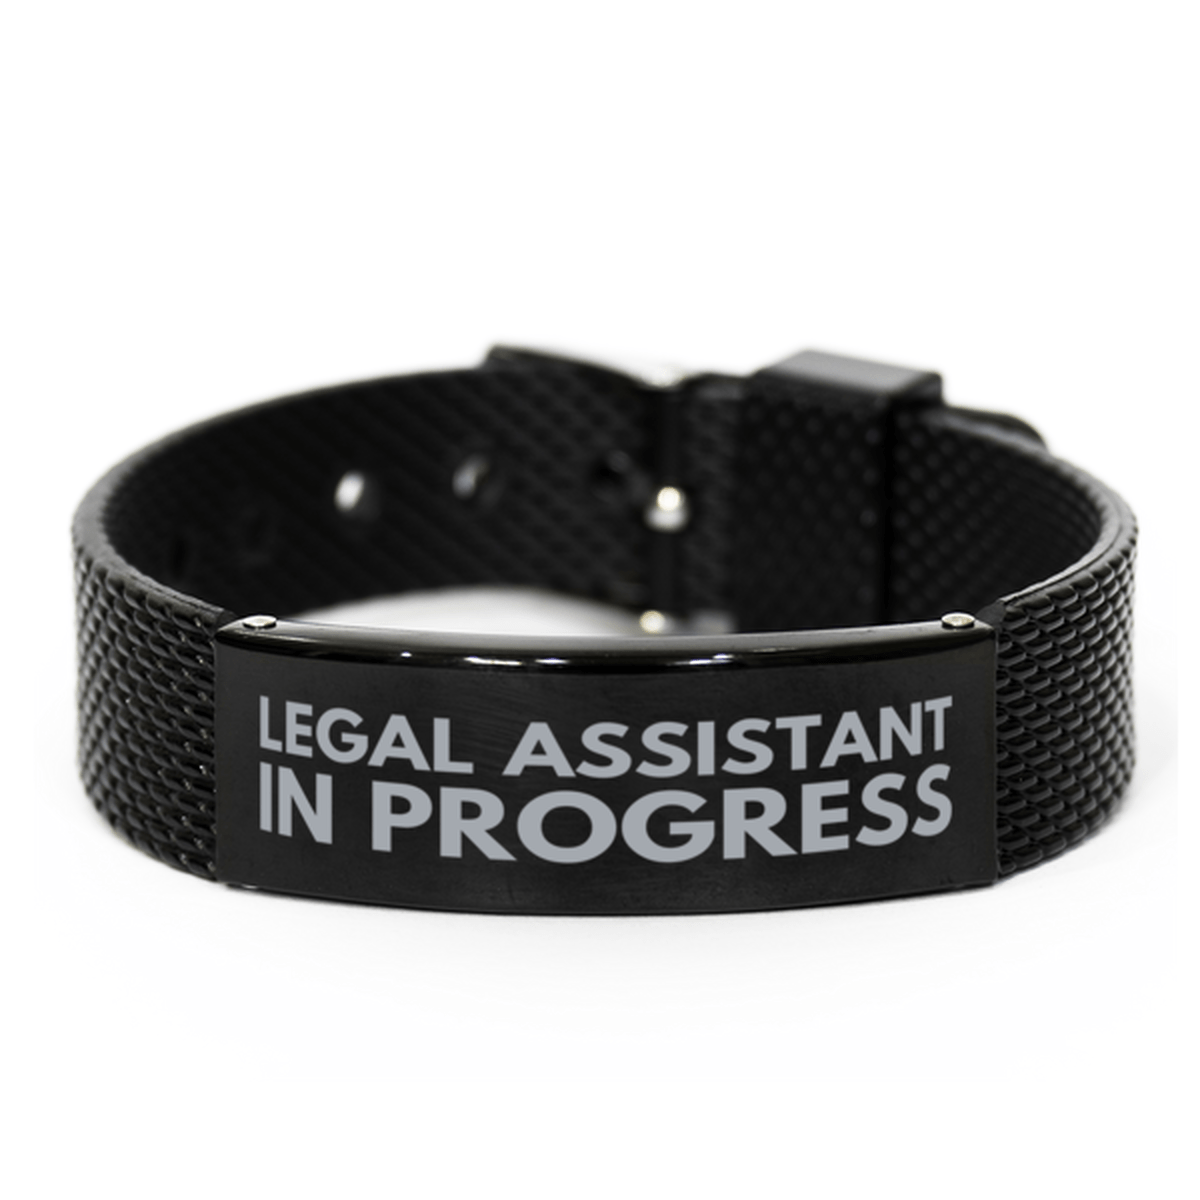 Inspirational Legal Assistant Black Shark Mesh Bracelet, Legal Assistant In Progress, Best Graduation Gifts for Students